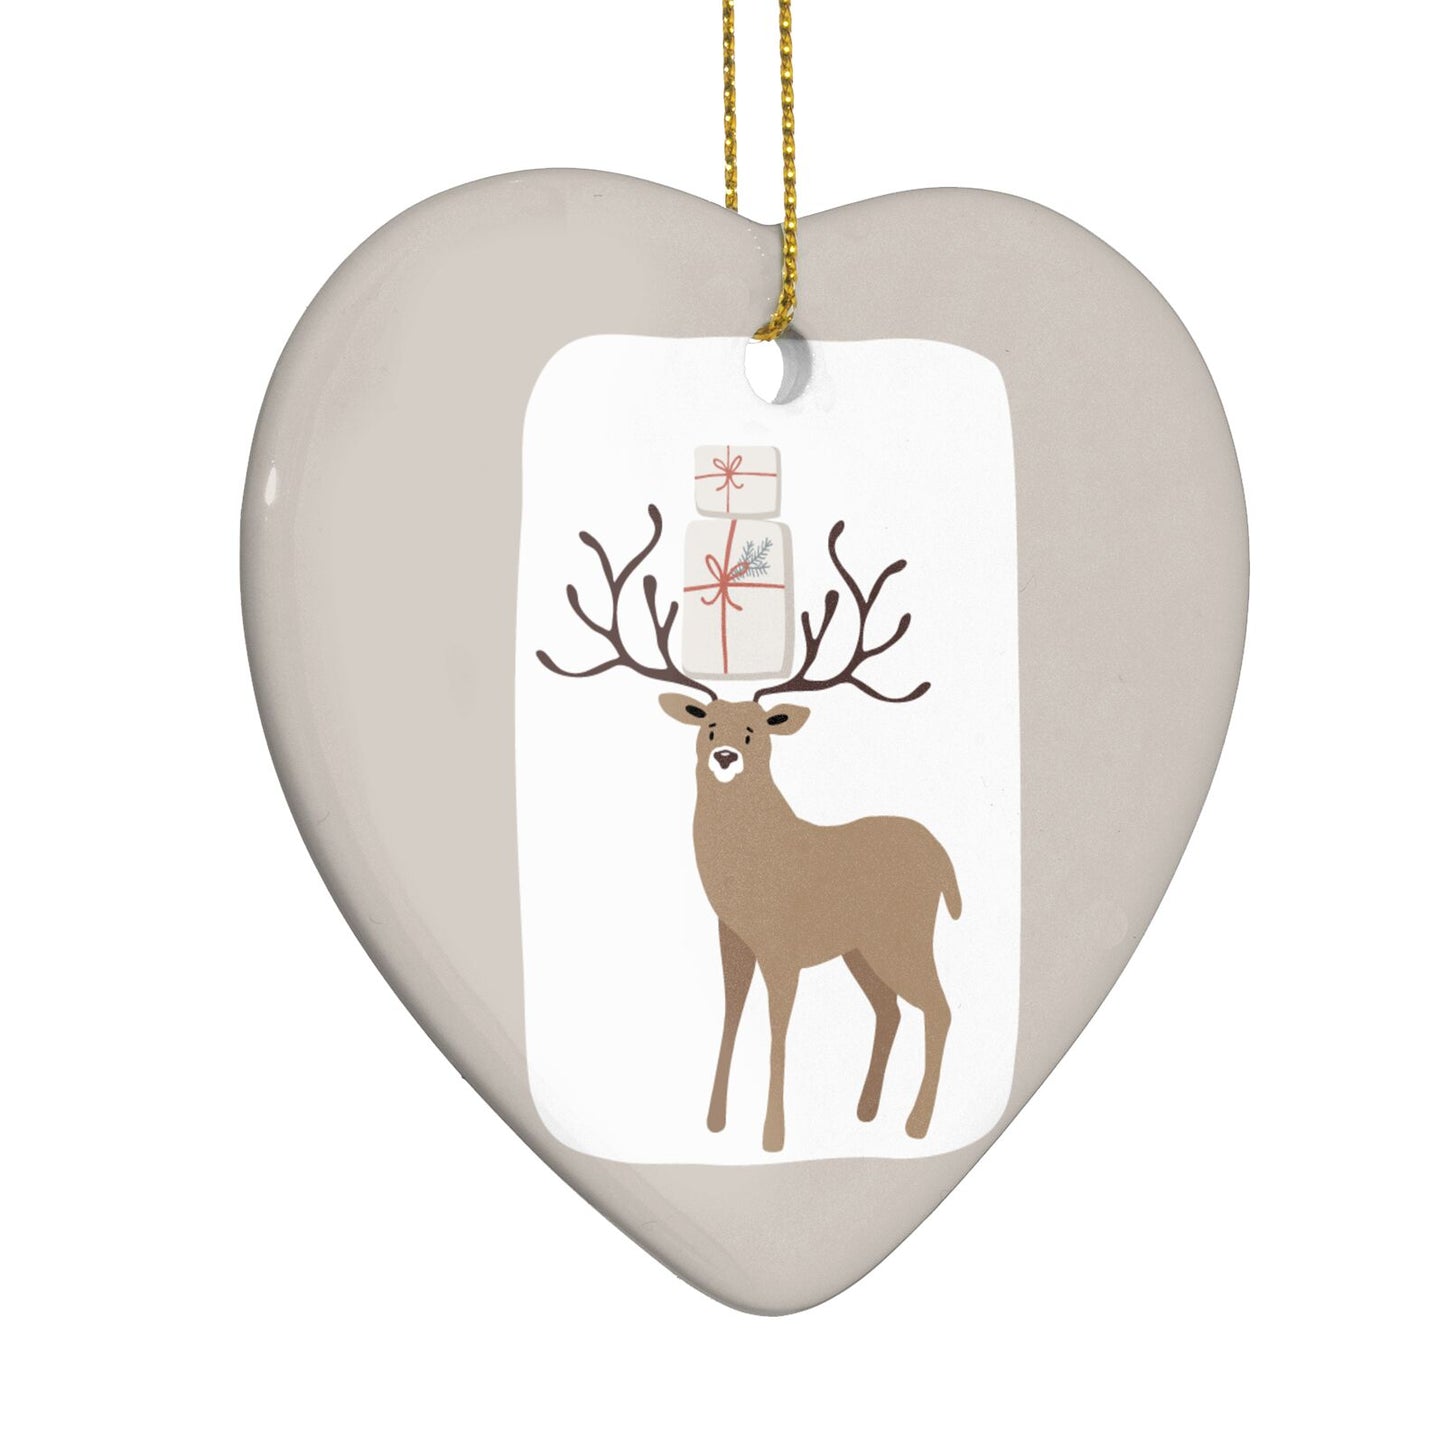 Reindeer Presents Heart Decoration Side Angle